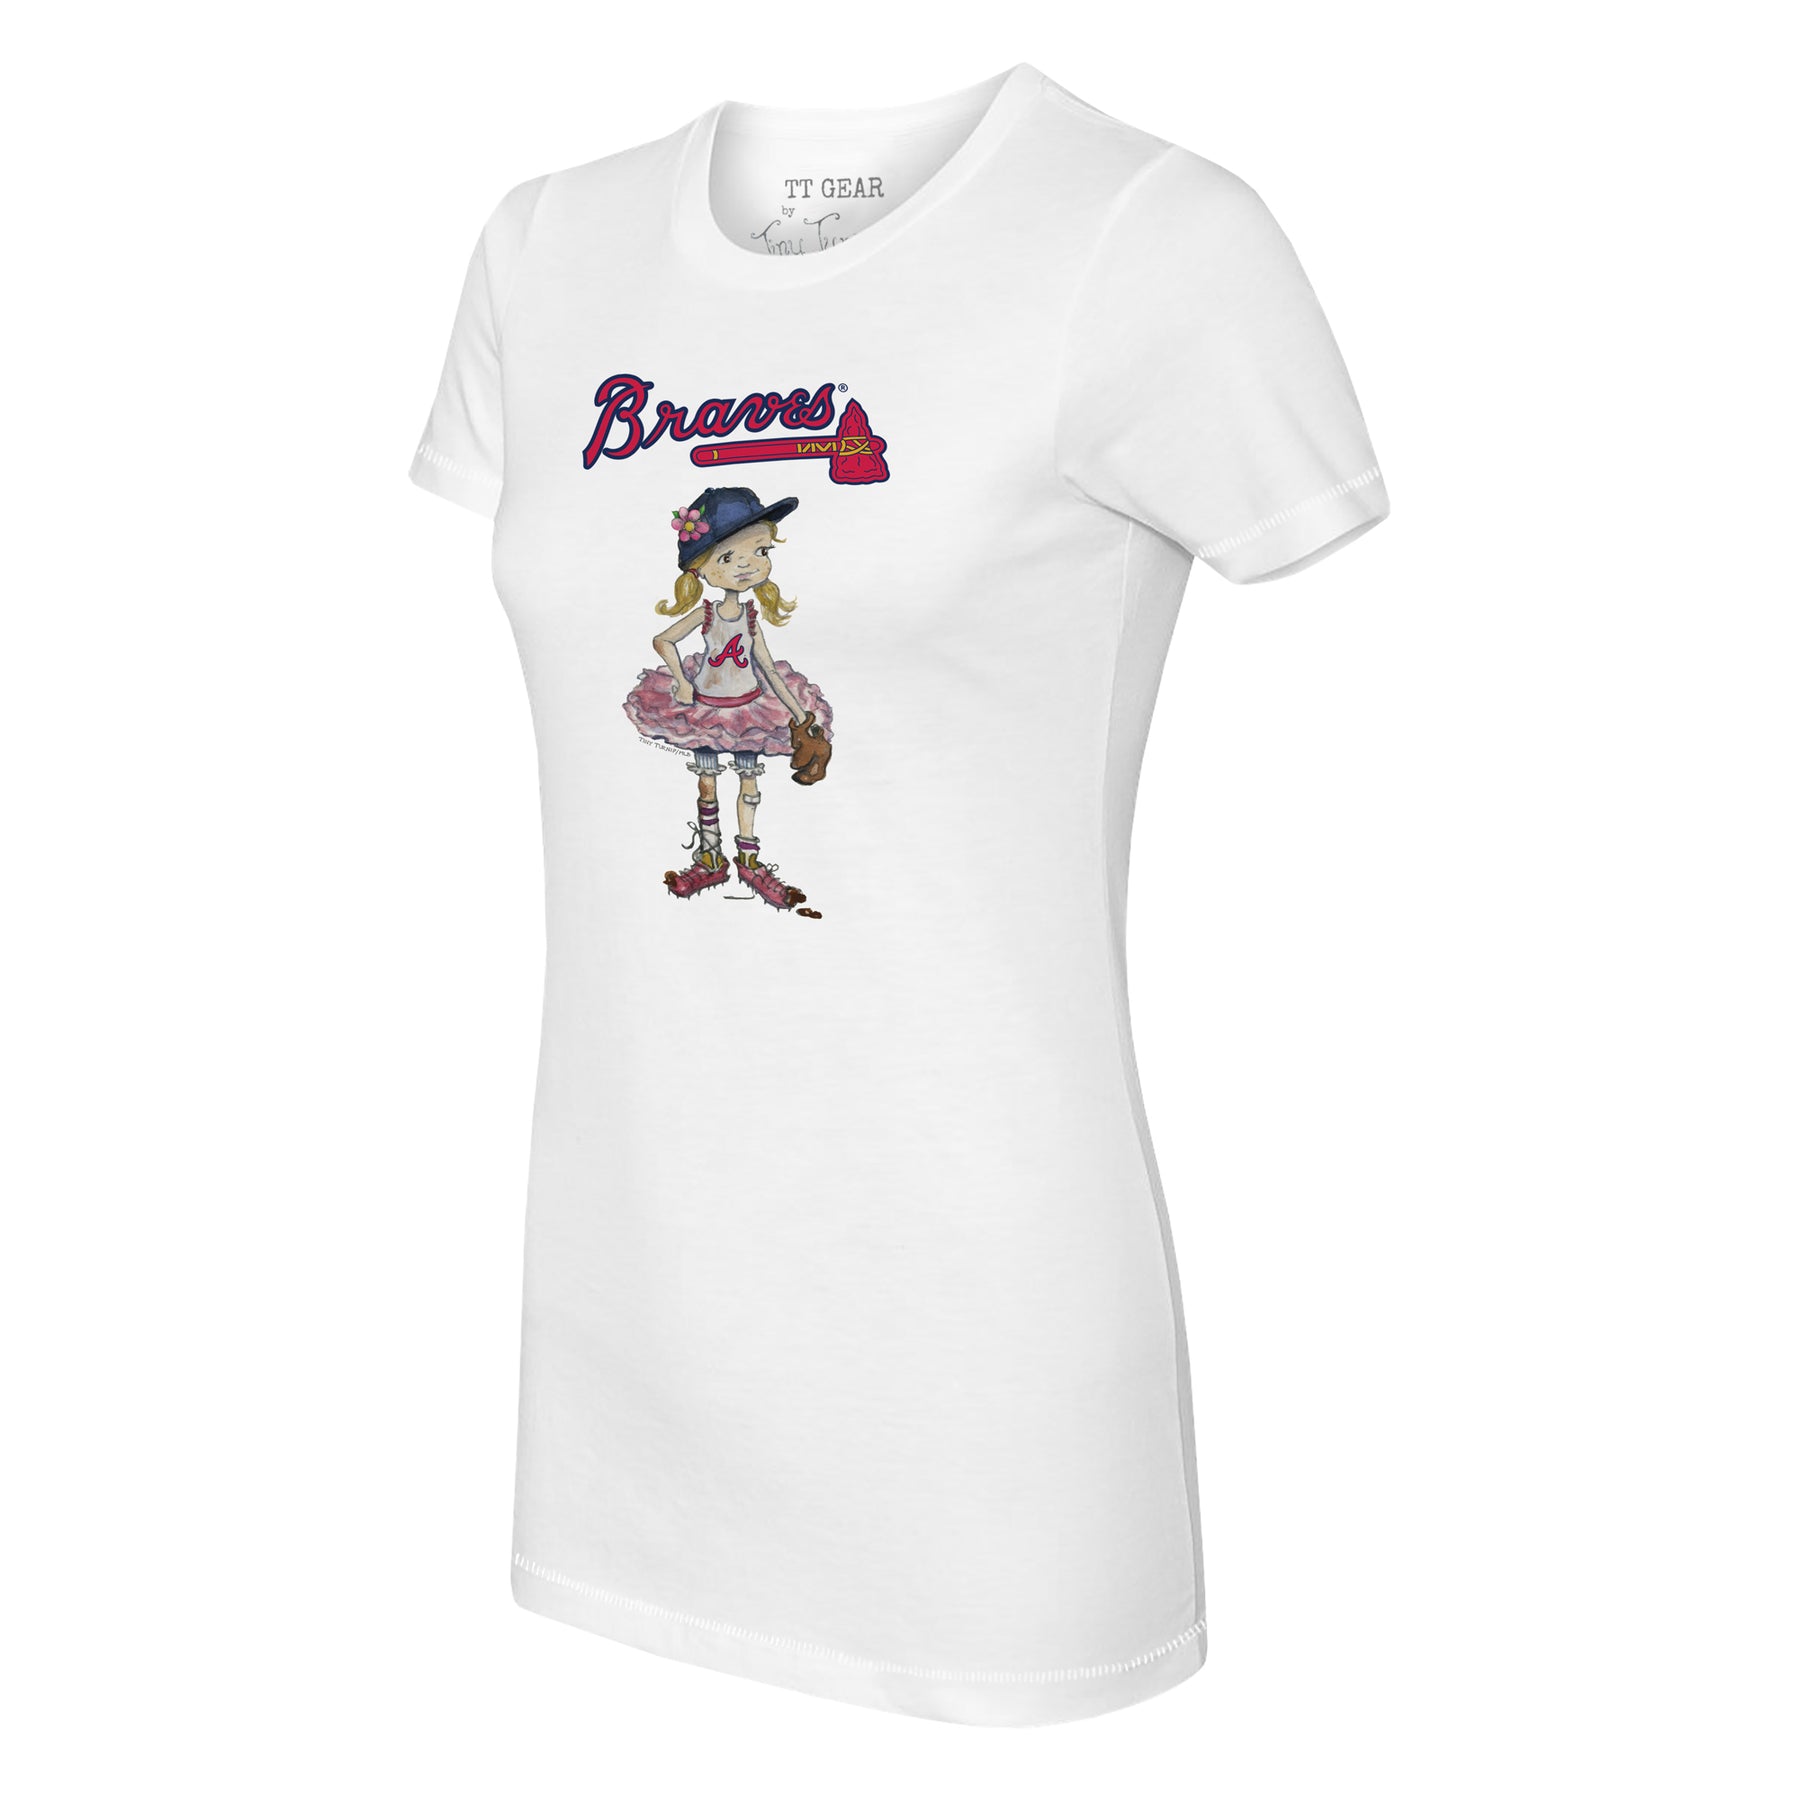 Atlanta Braves Babes Tee Shirt